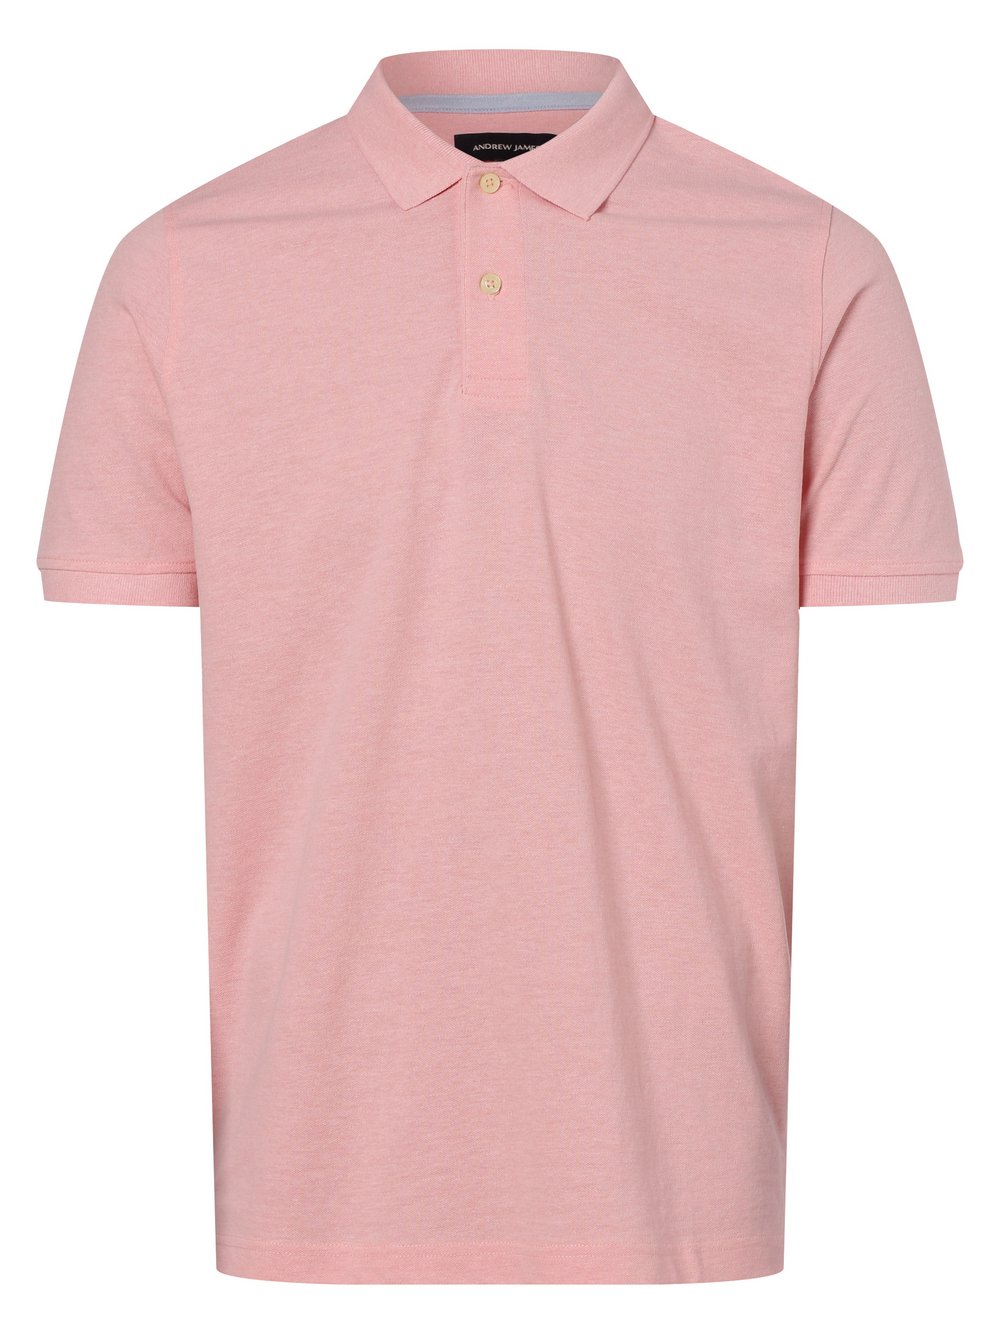 Andrew James - Męska koszulka polo, różowy